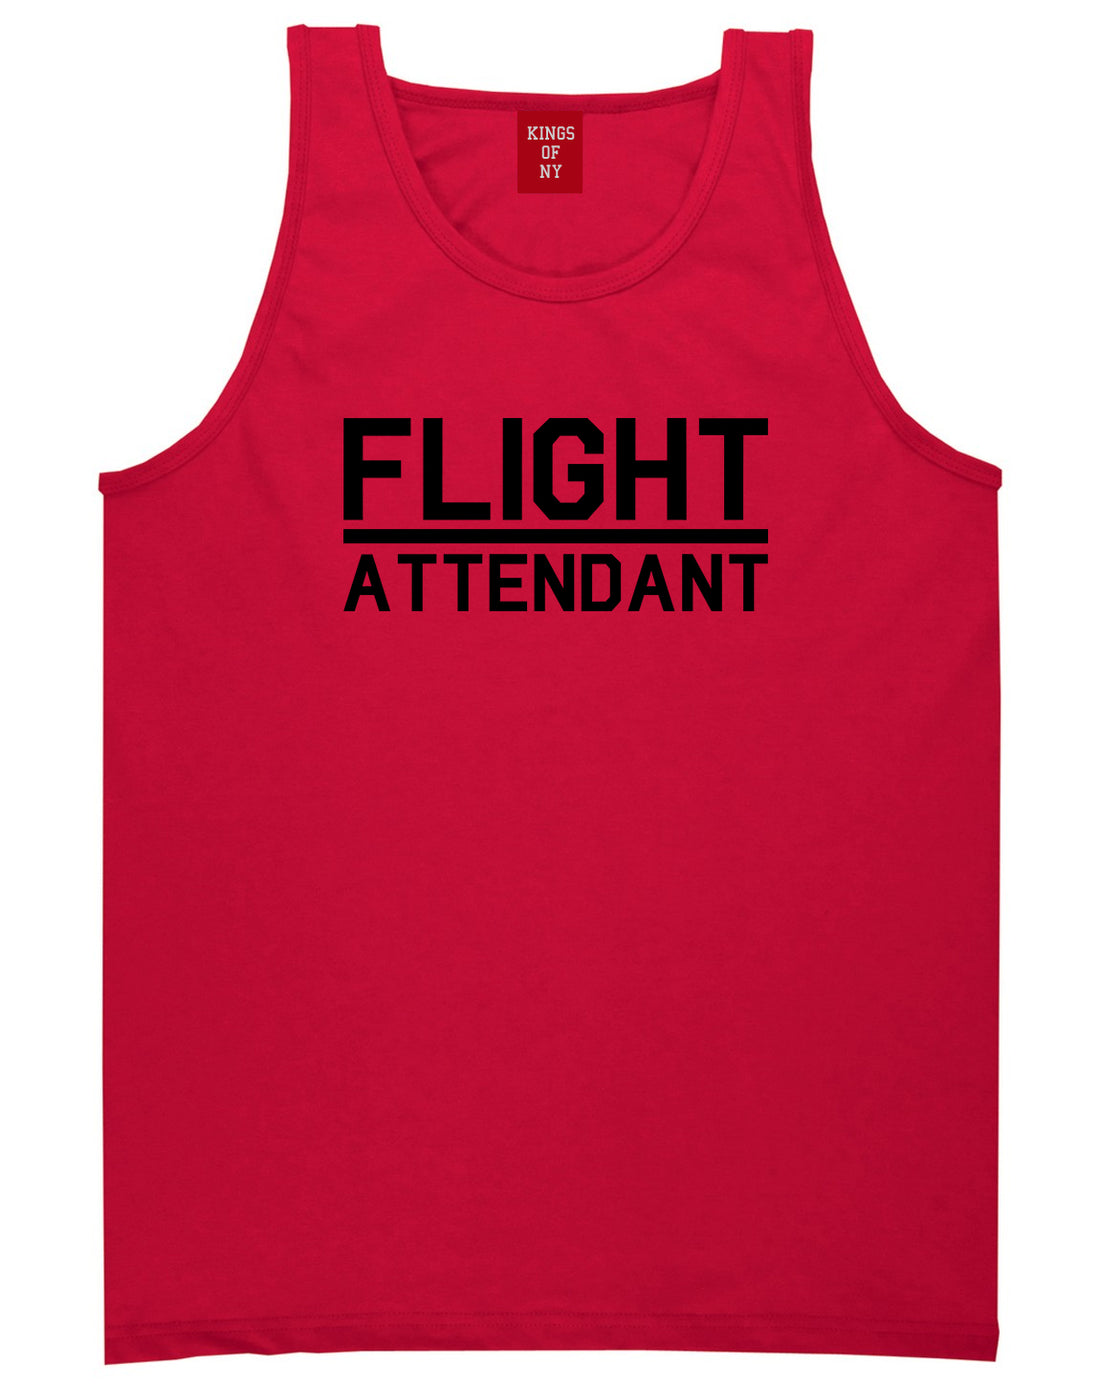 Flight Attendant Stewardess Mens Red Tank Top Shirt by KINGS OF NY